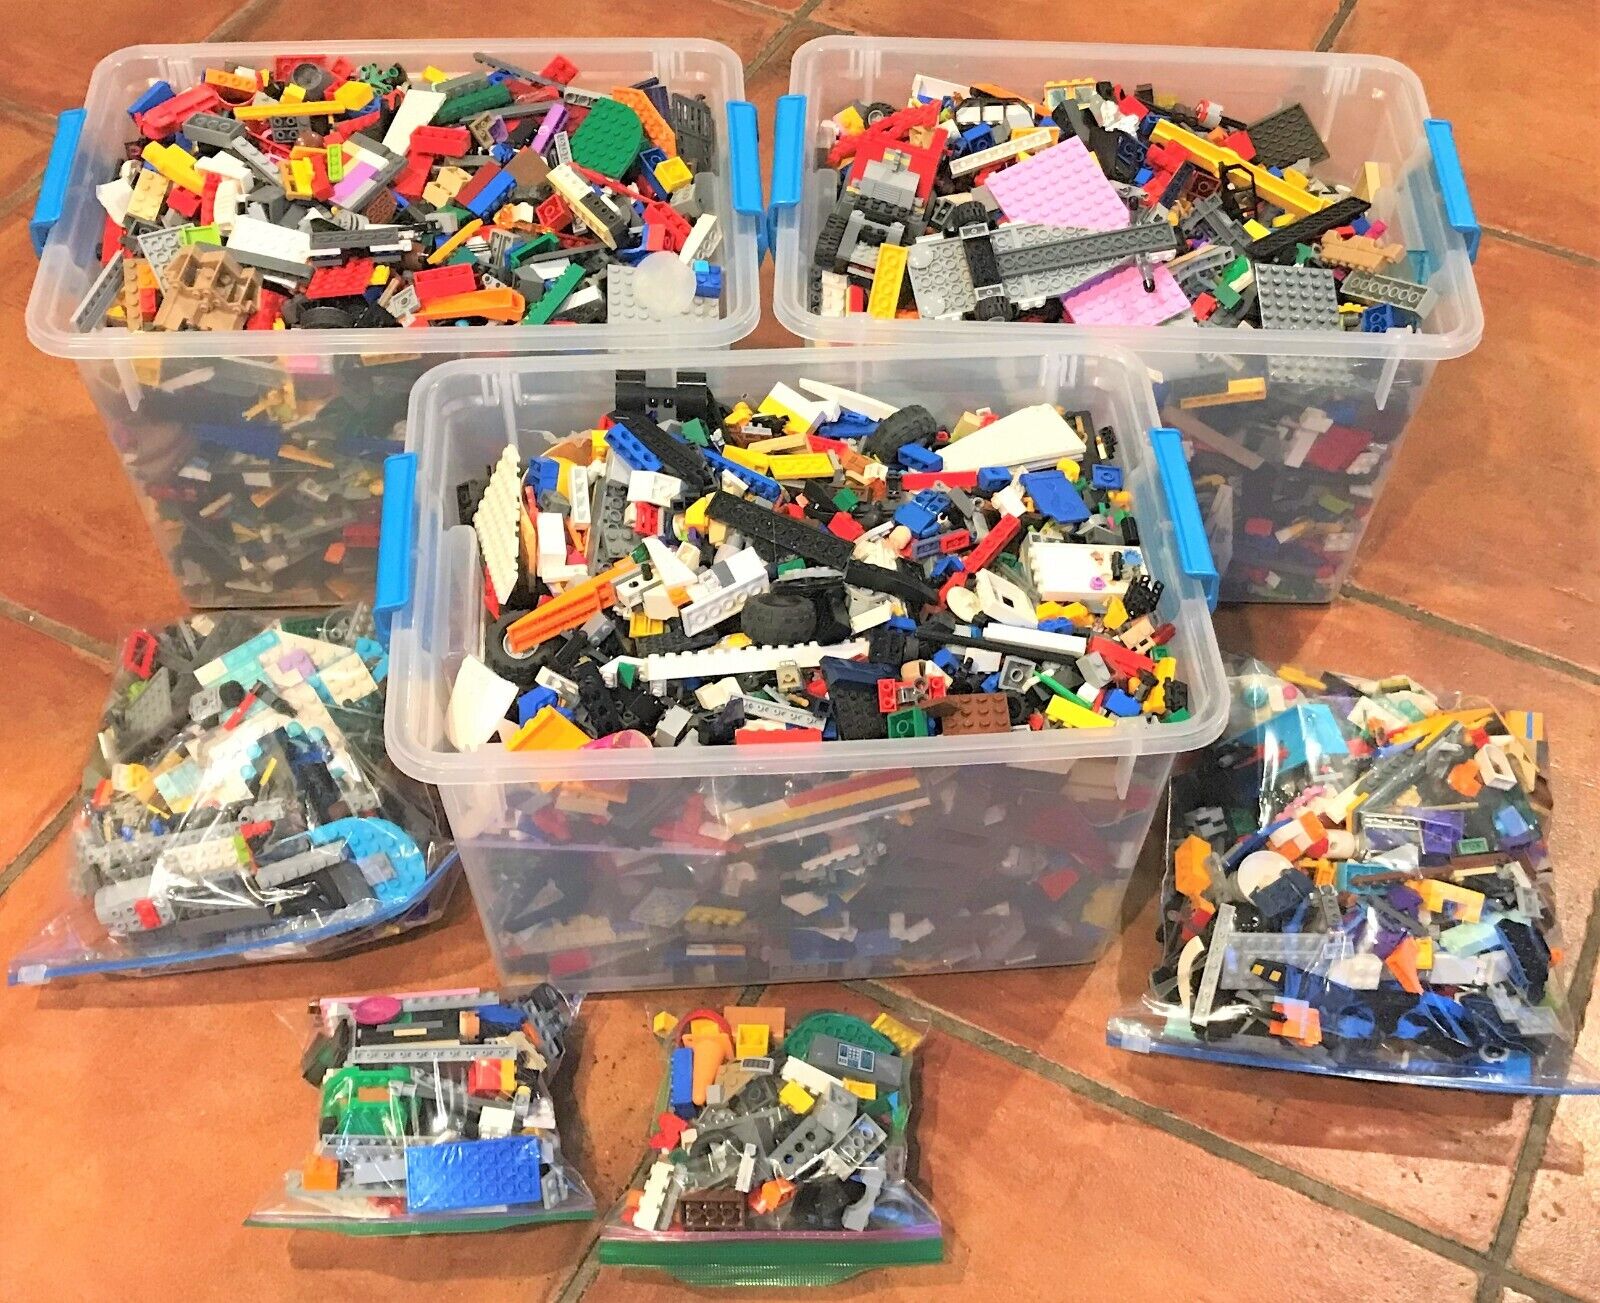 100 - 500 LEGO LOT PIECES BUILDING BRICKS PARTS PLATES MIXED SIZES & COLORS